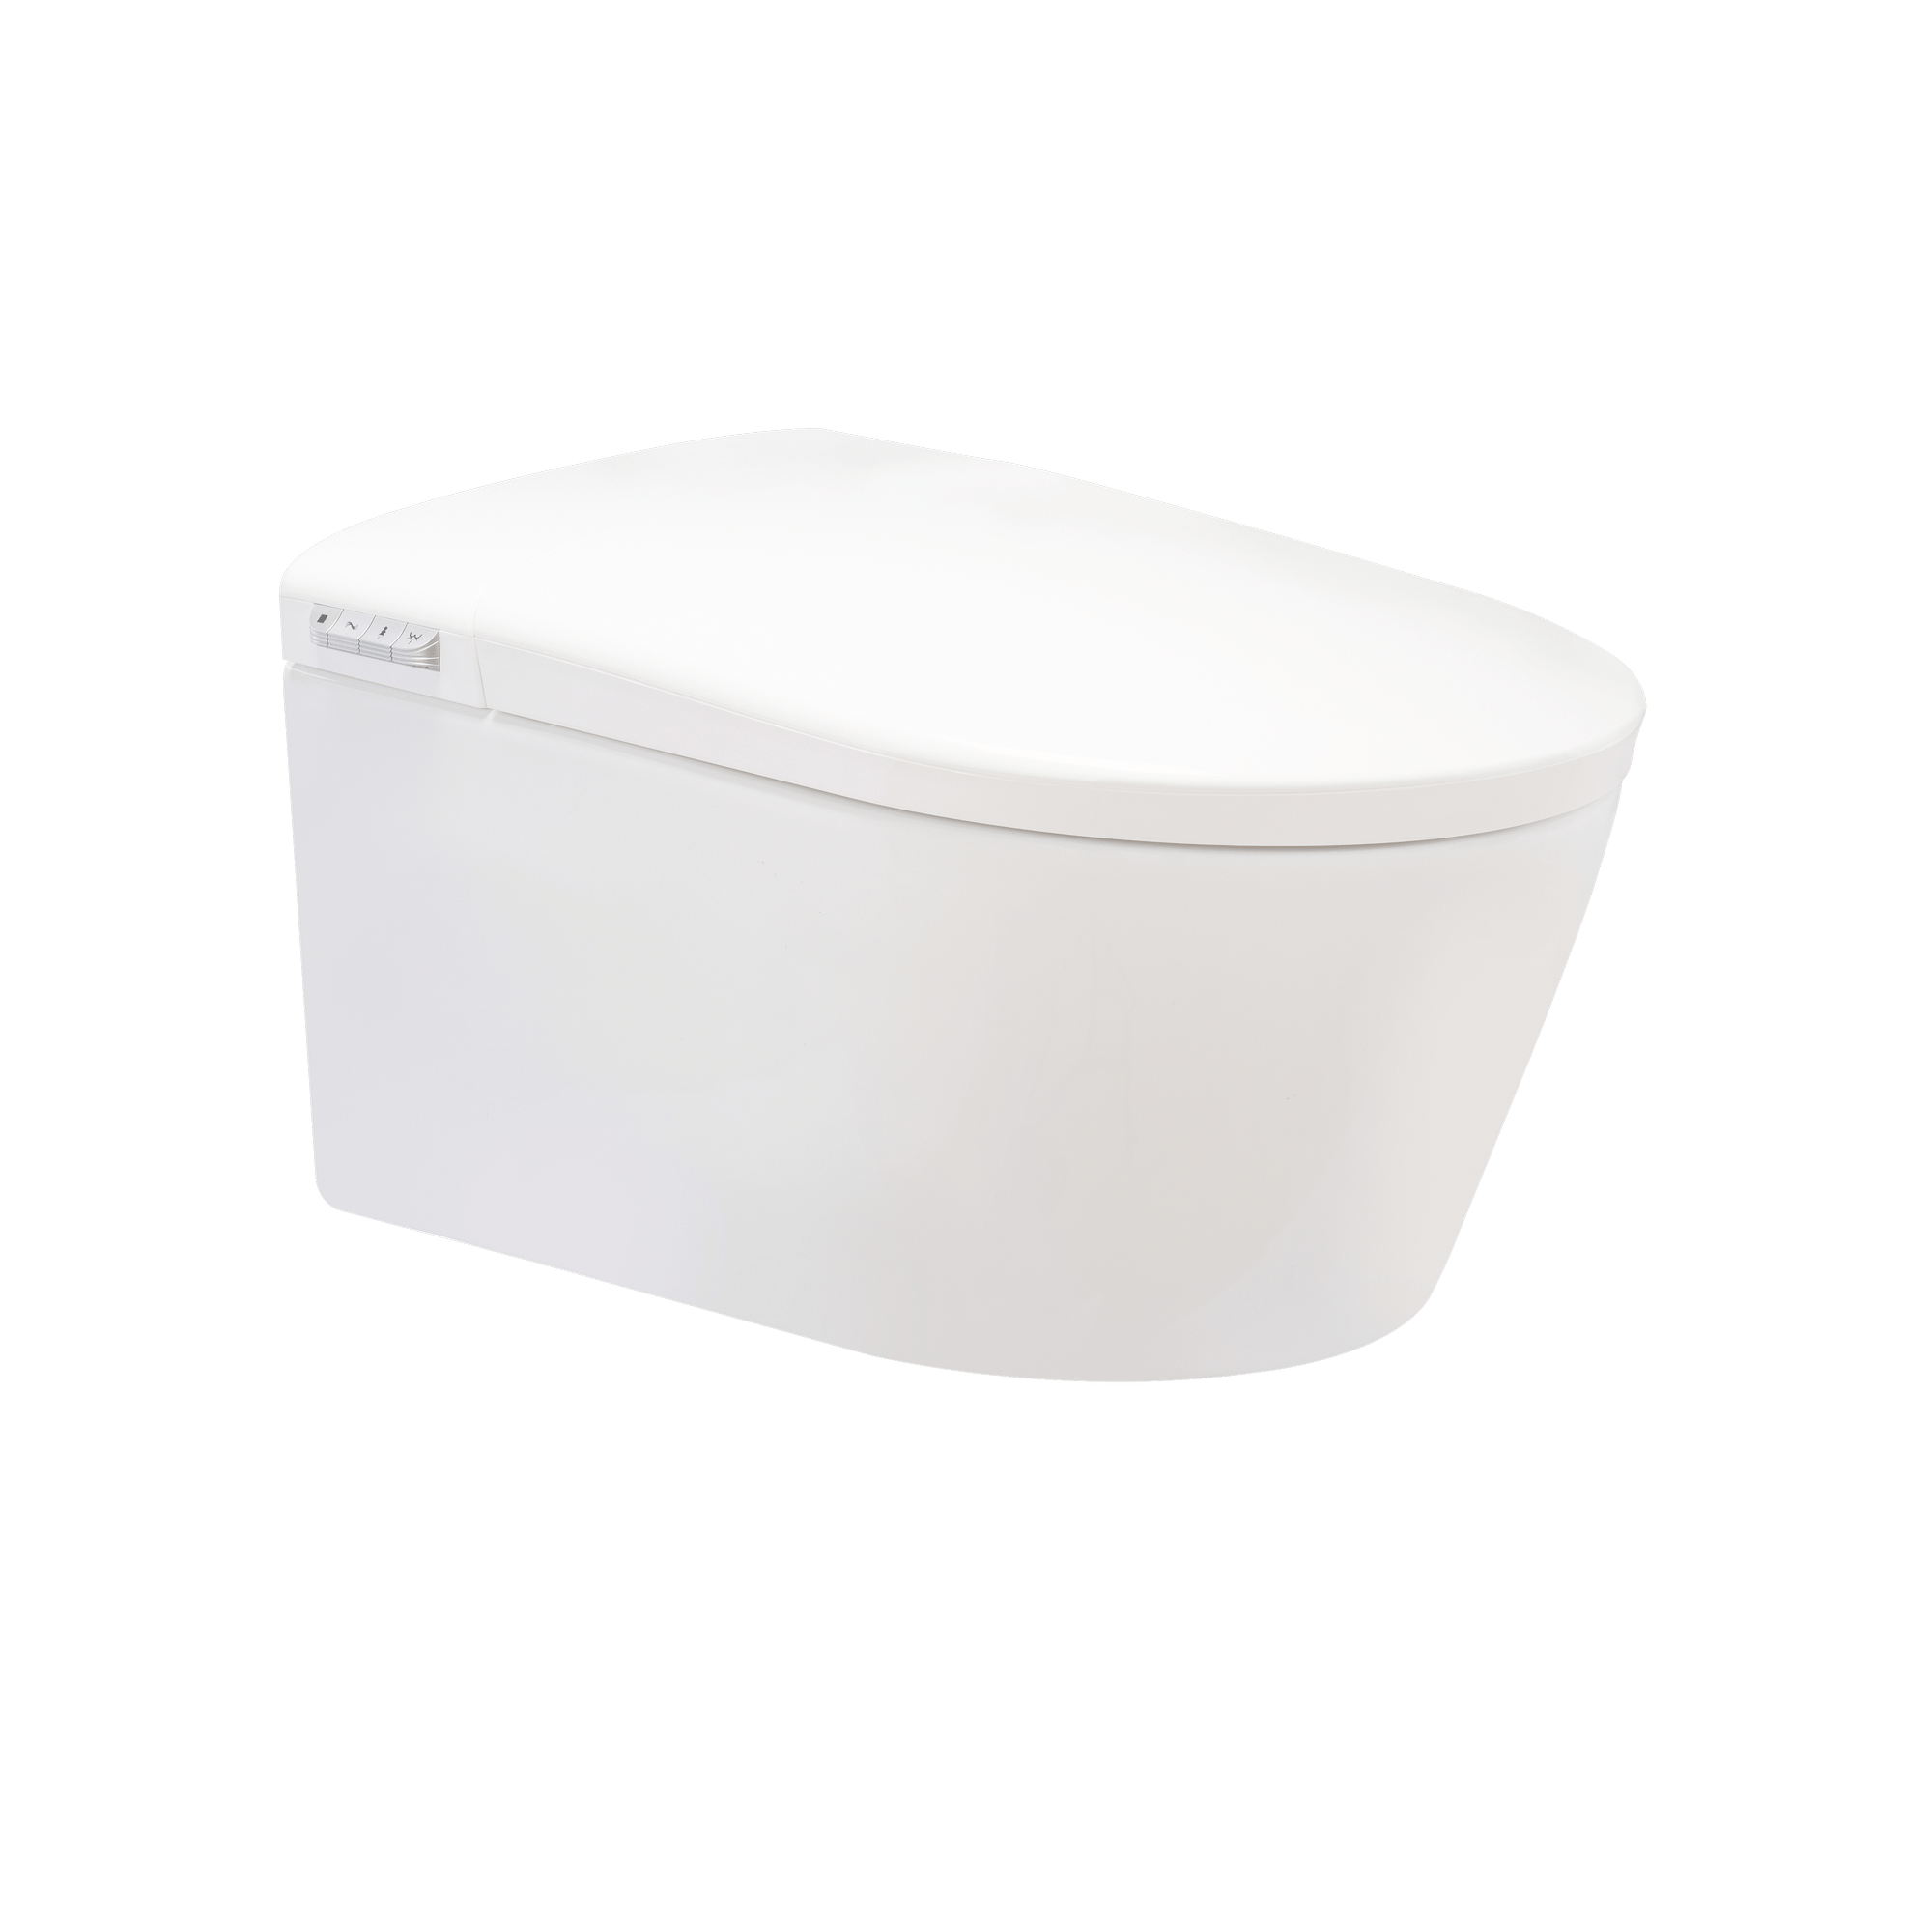 VEROSAN PRO Dusch-WC 'Divino' weiß spülrandlos, temperaturgesteuerter WC-Sitz